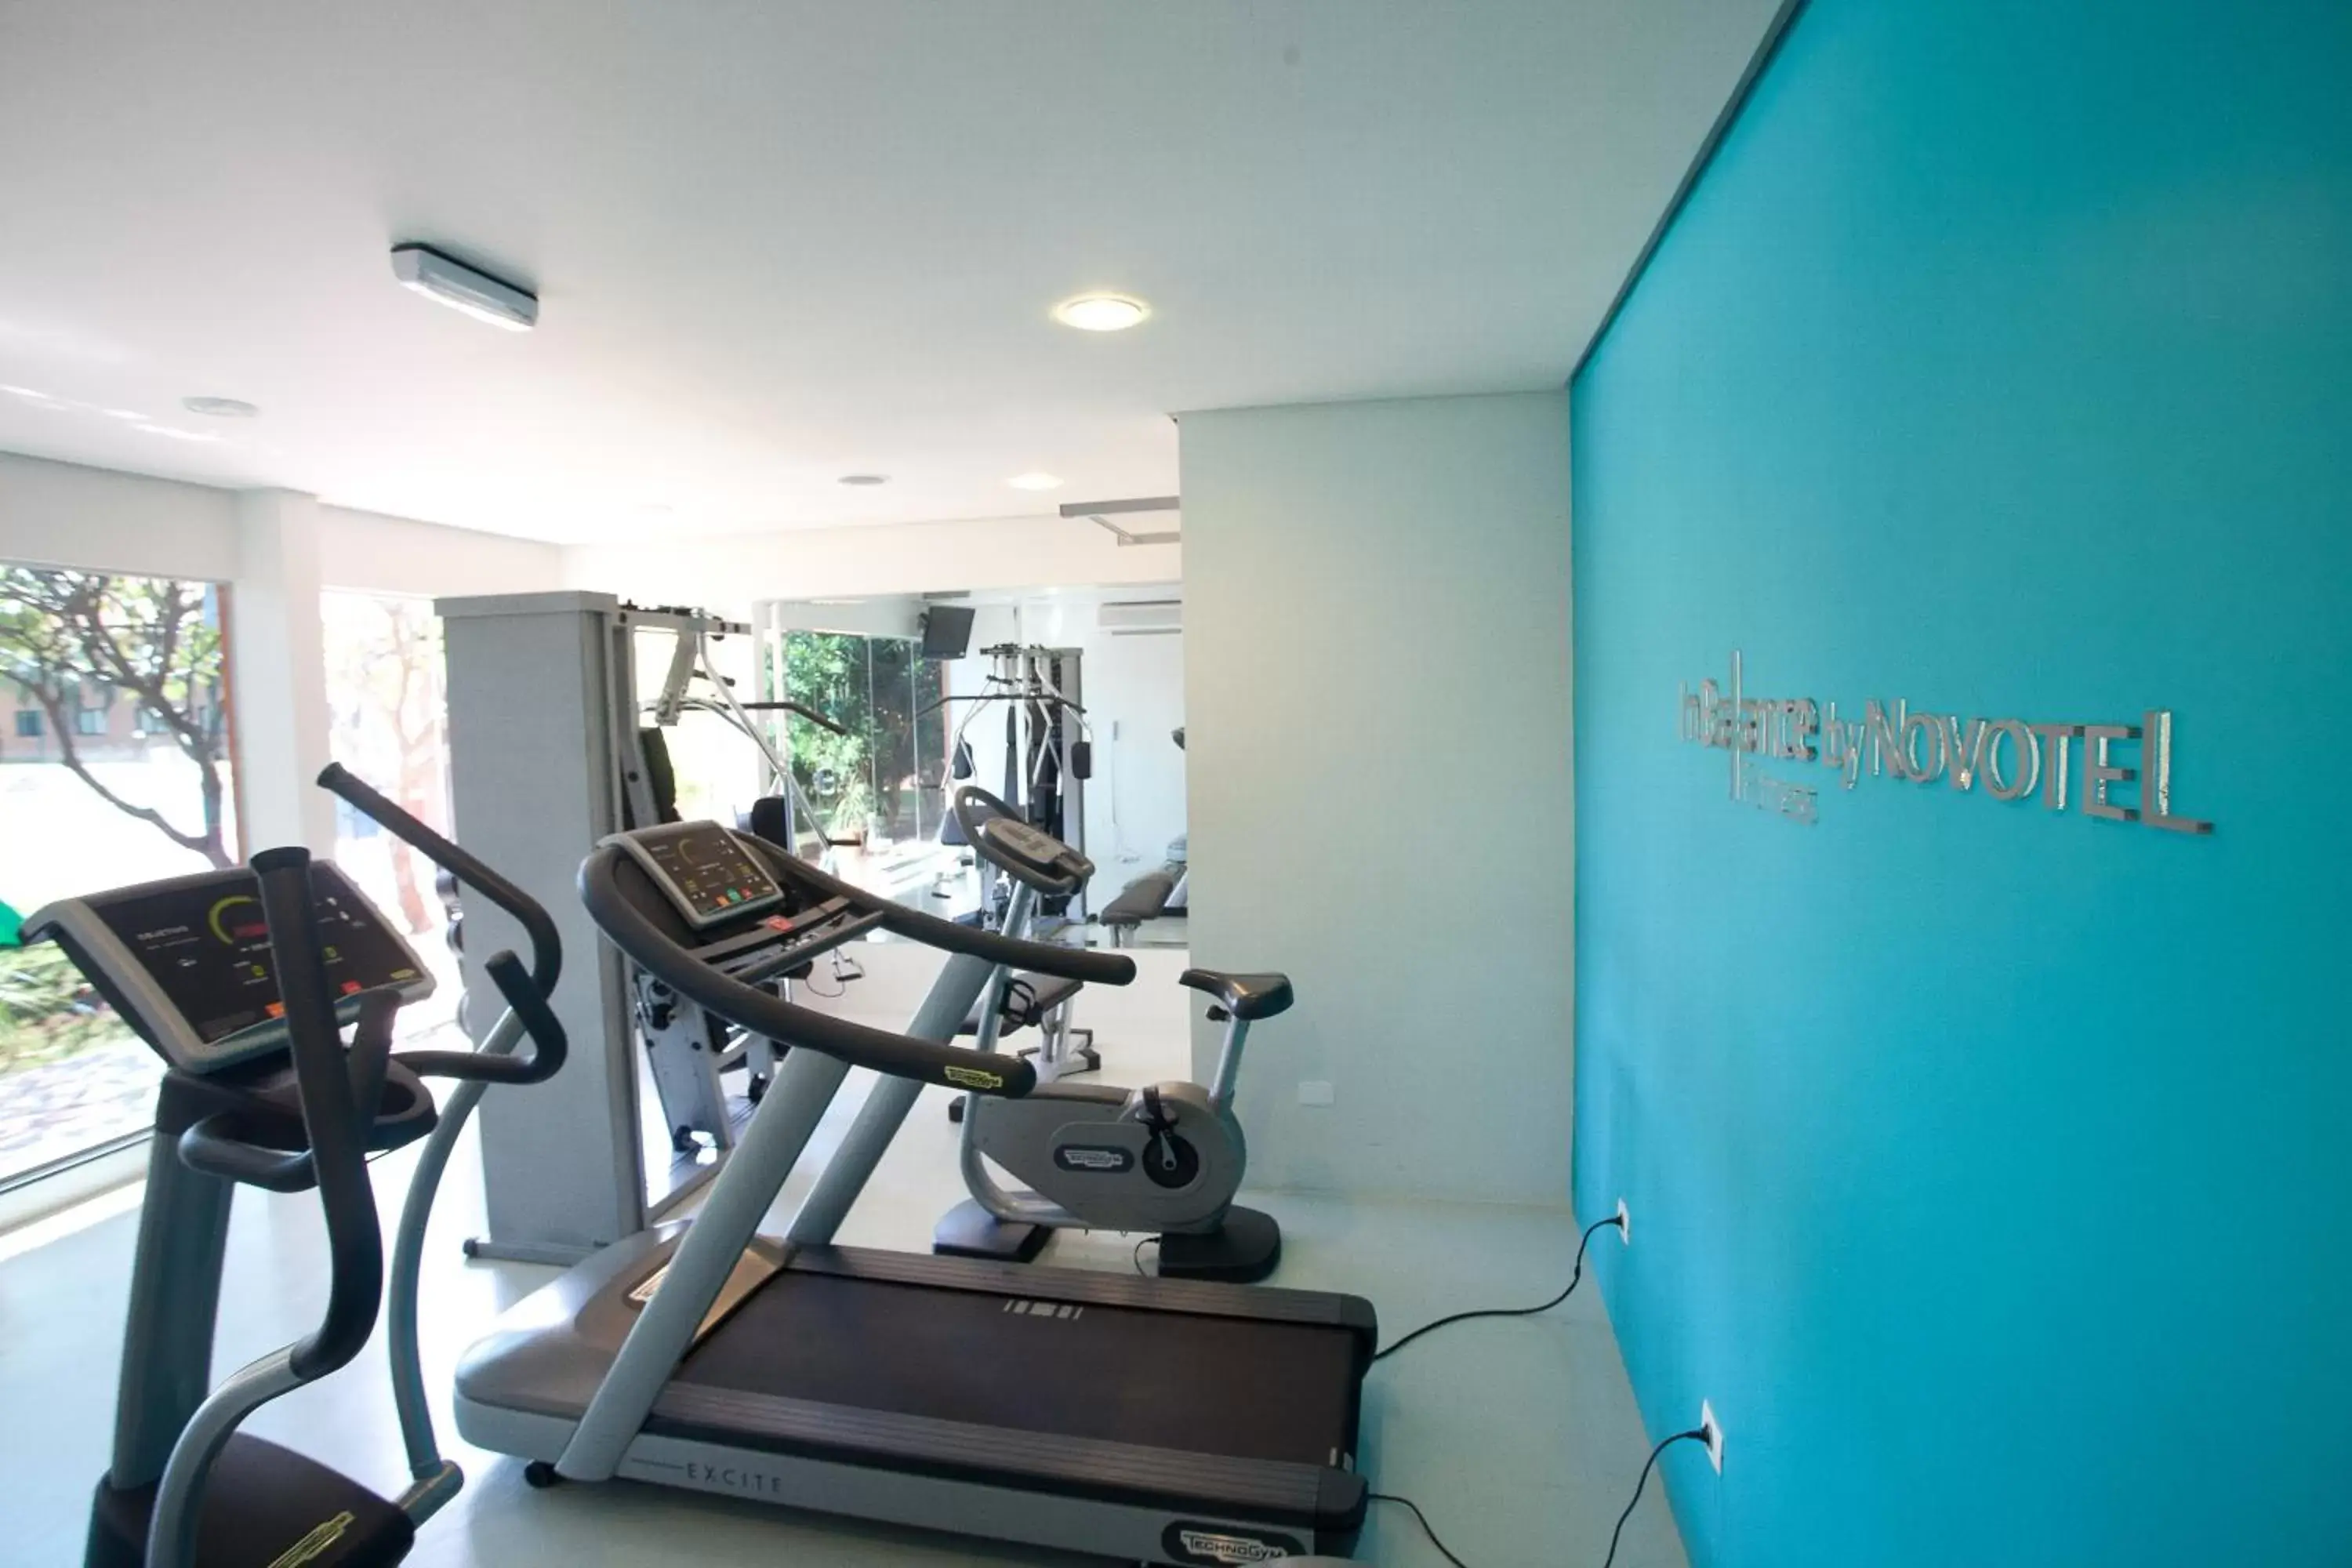 Fitness centre/facilities, Fitness Center/Facilities in Novotel Campo Grande